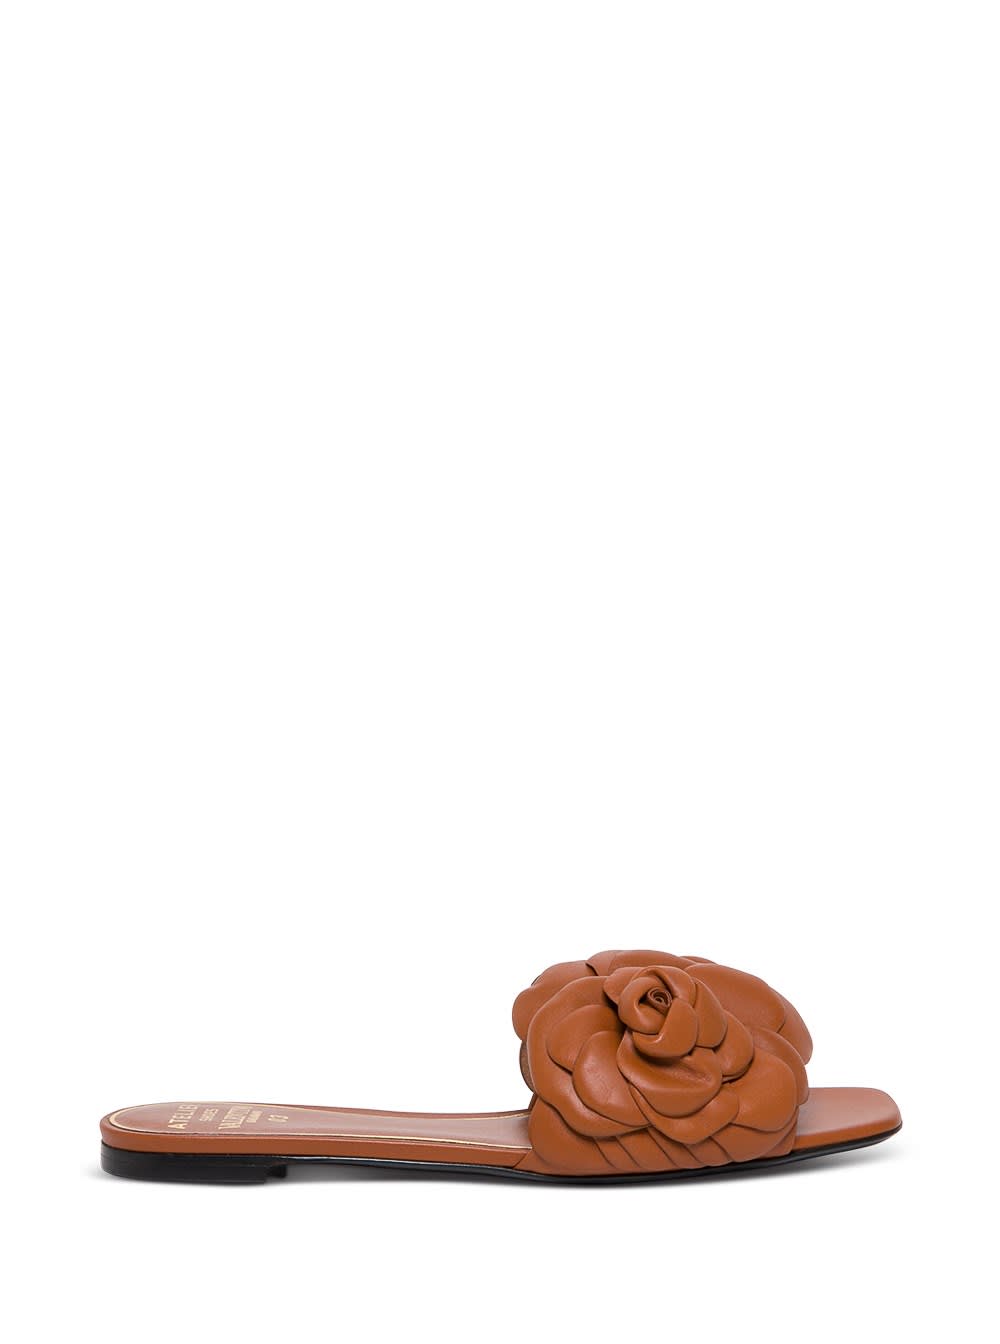 Valentino Garavani 03 Rose Edition Brown Leather Atelier Slide Sandals